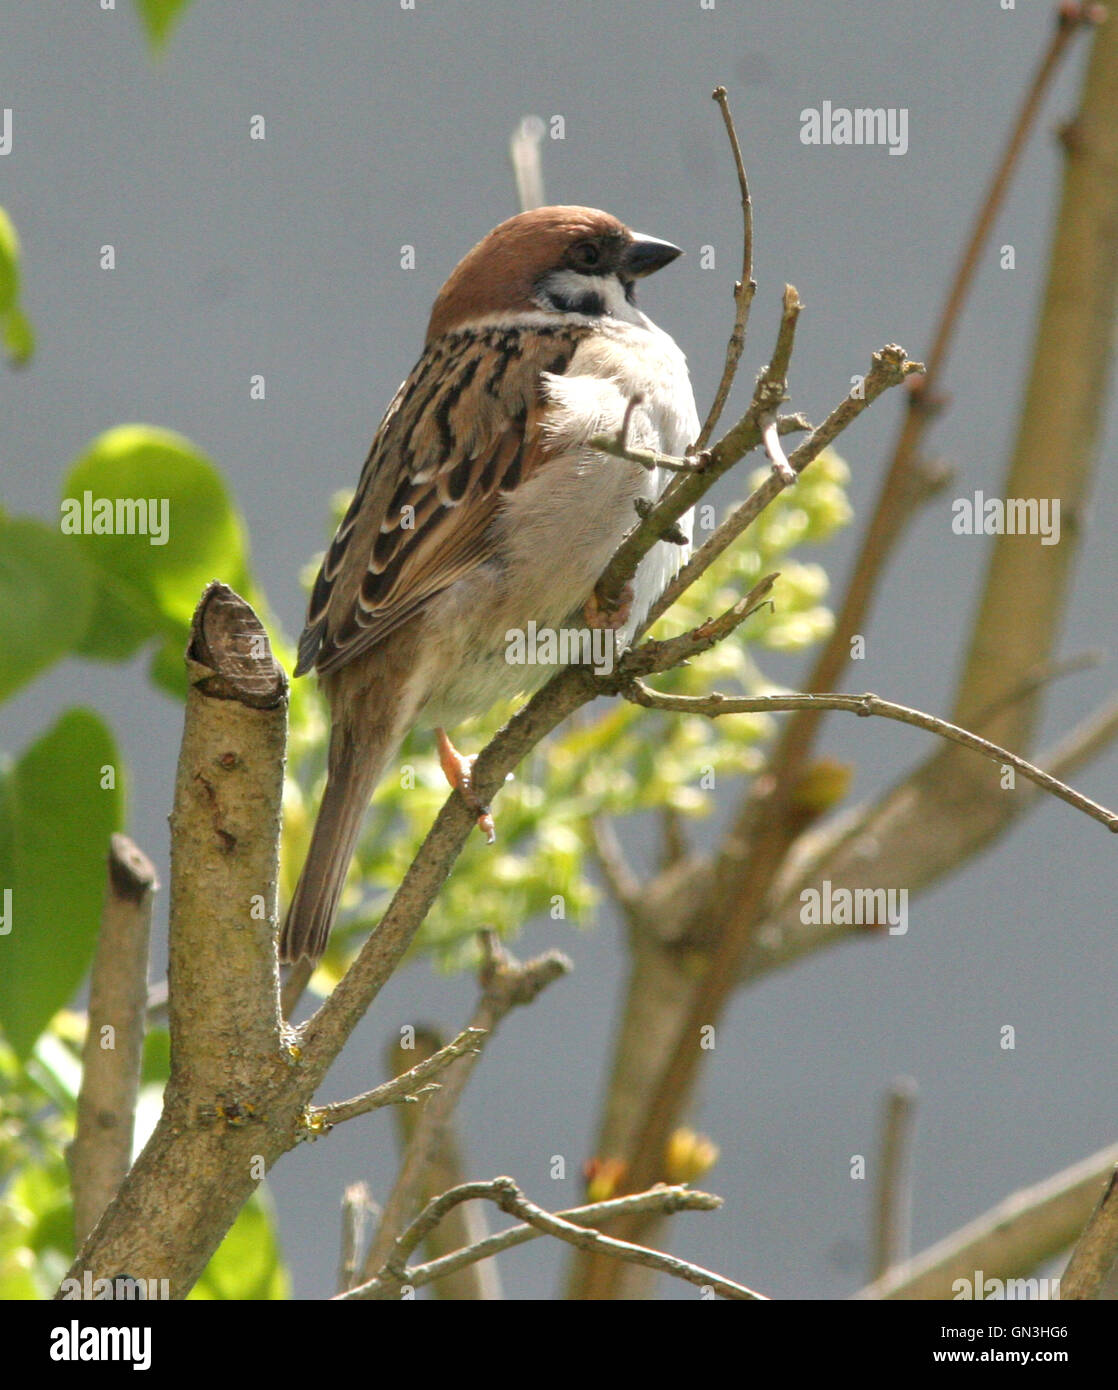 Tree sparrow on branch Stock Photo